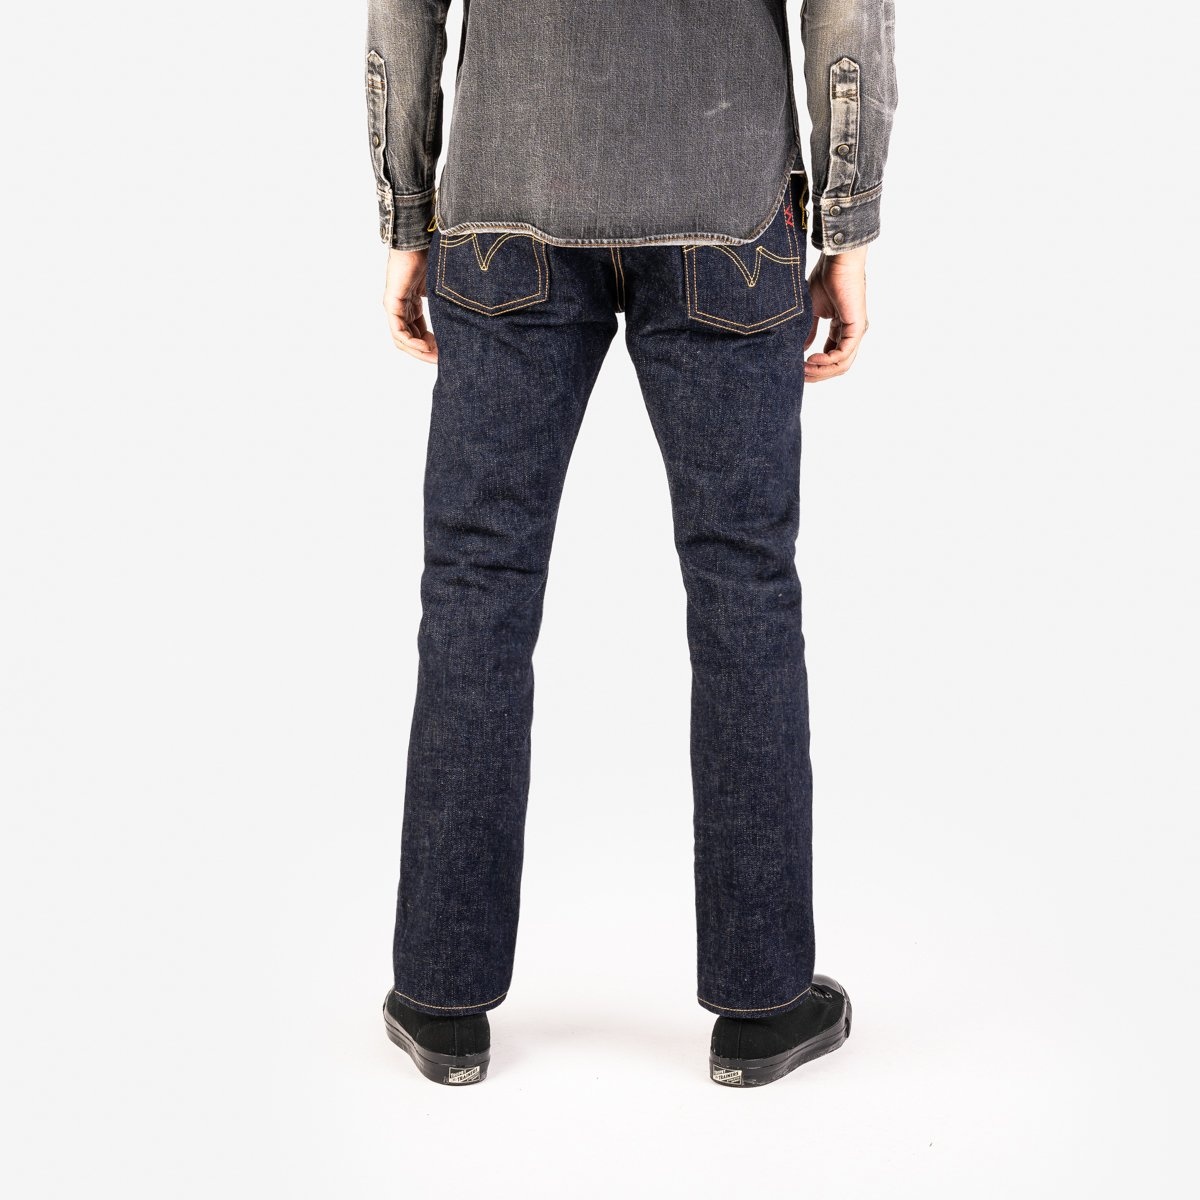 IH-555S-18 18oz Vintage Selvedge Denim Super Slim Cut Jeans - Indigo - 4